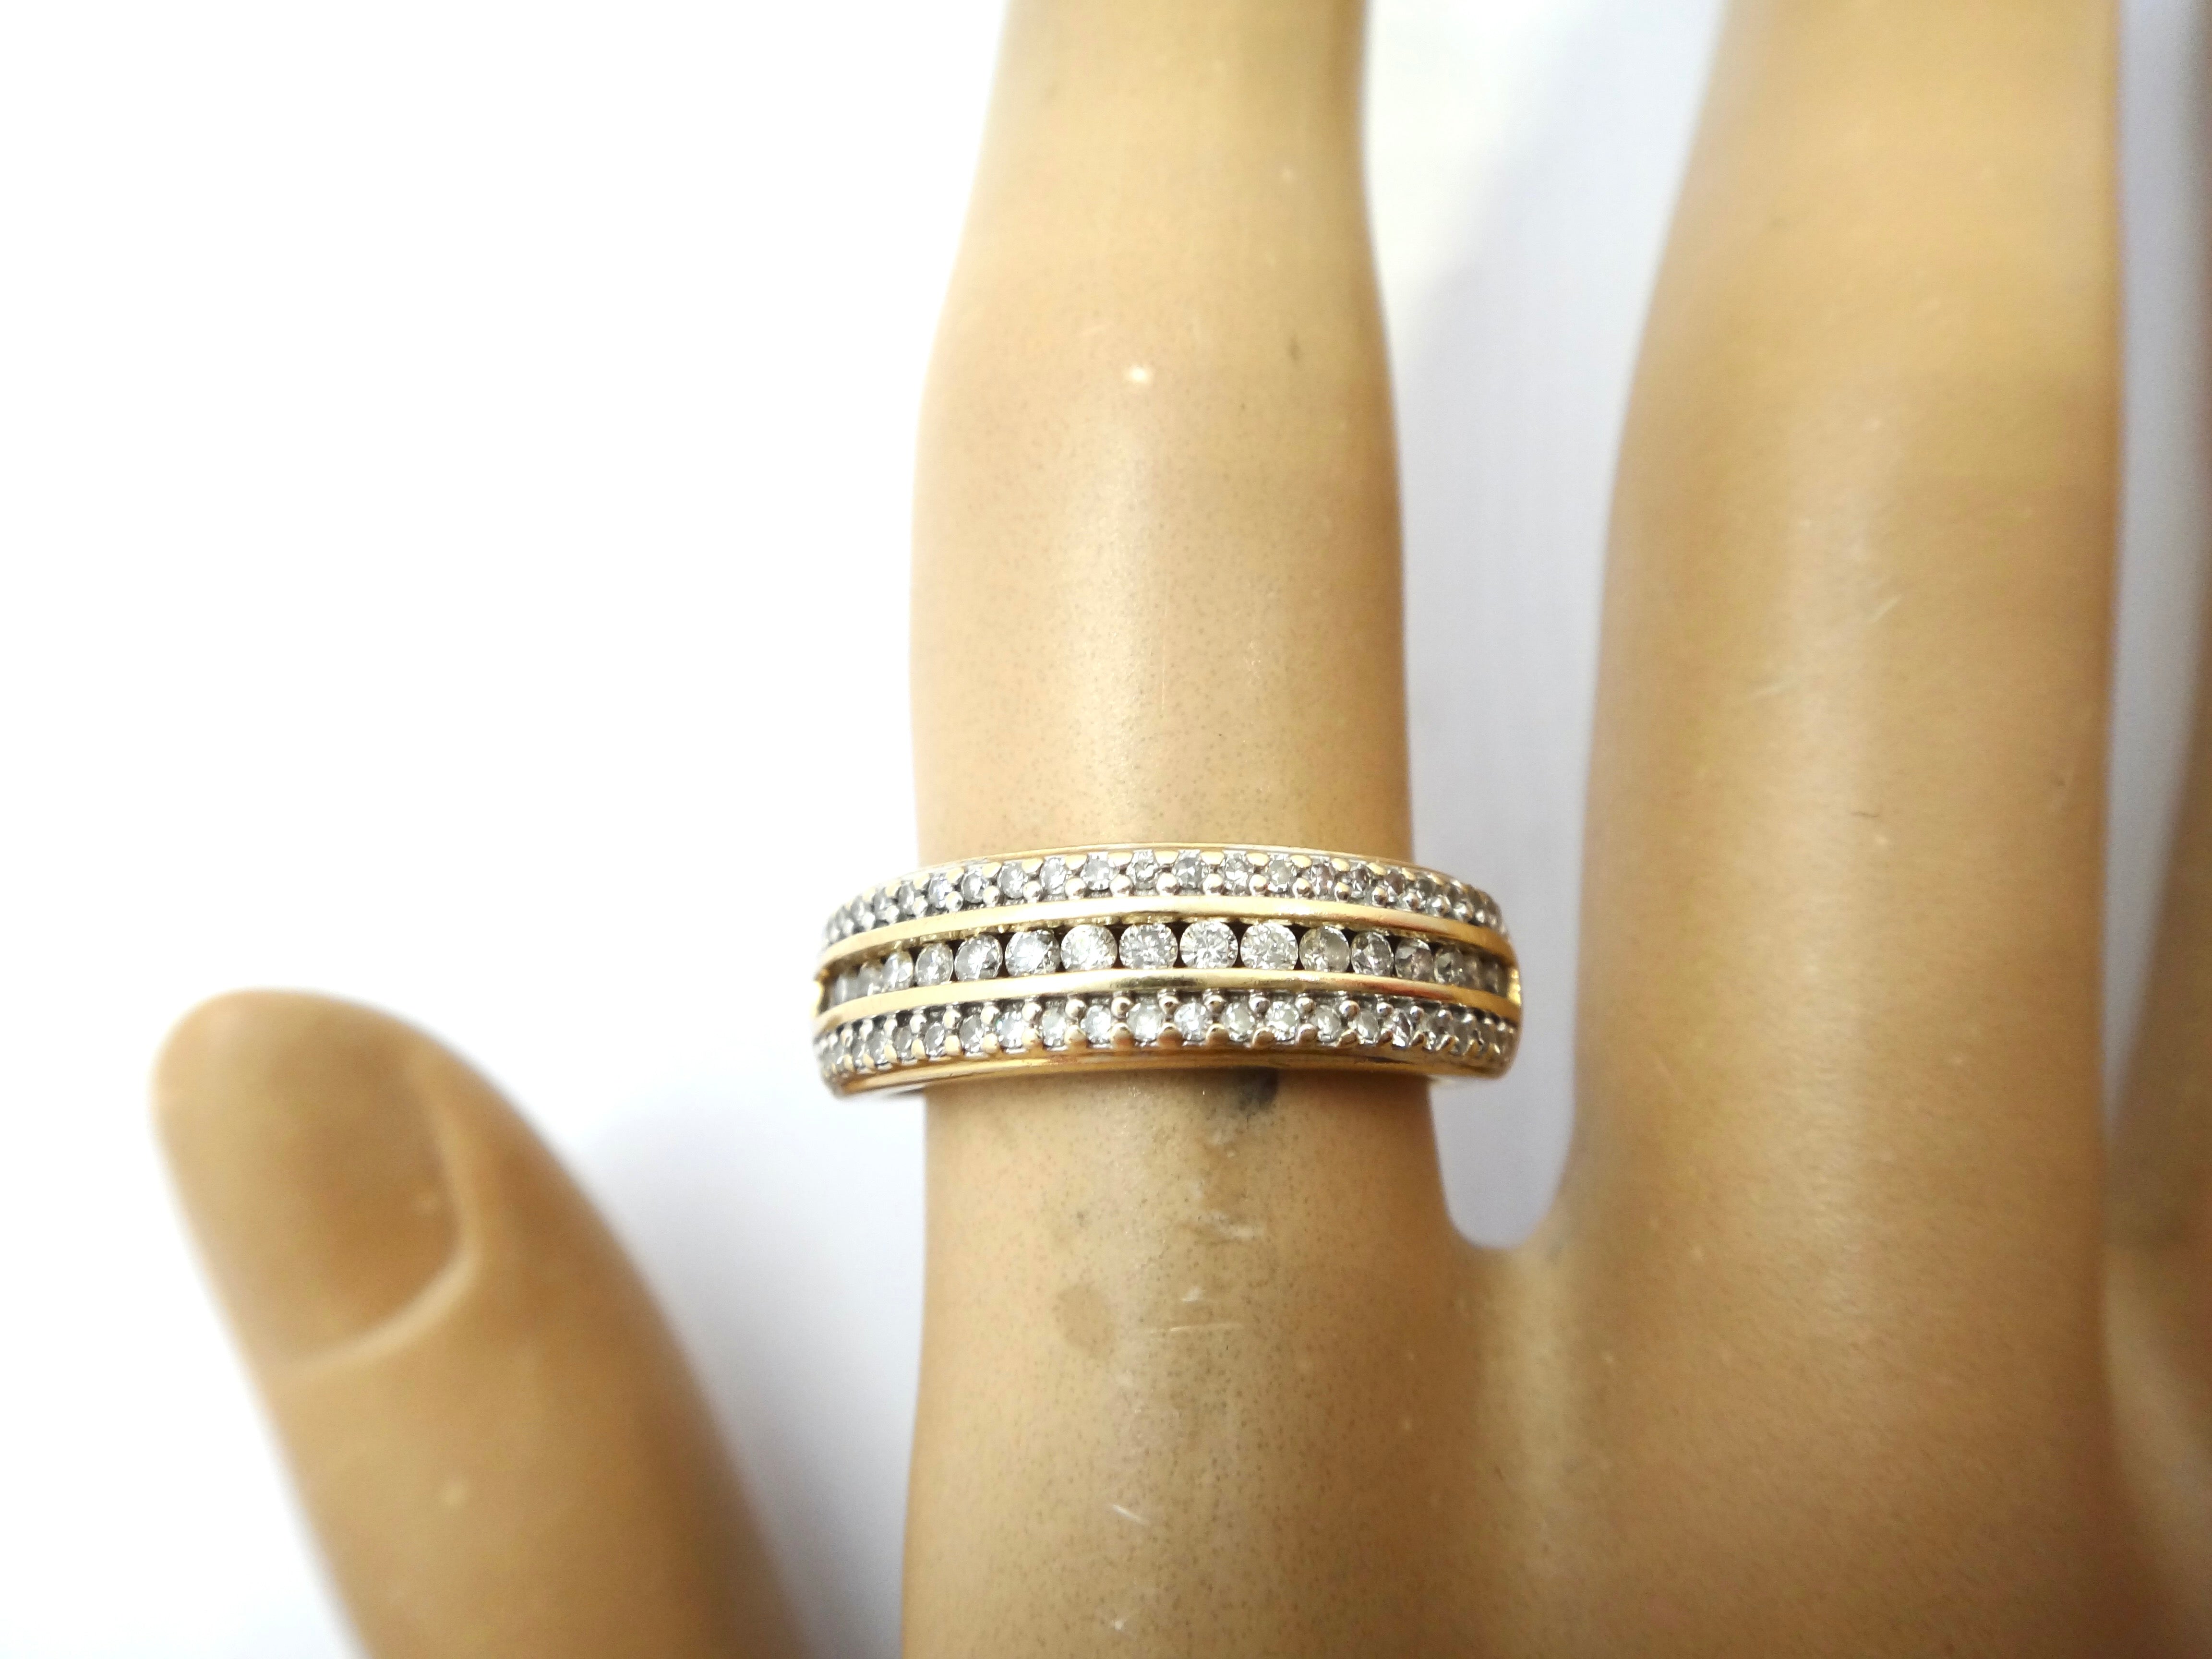 10CT Yellow GOLD ring & Multi RBC Diamond Band Ring